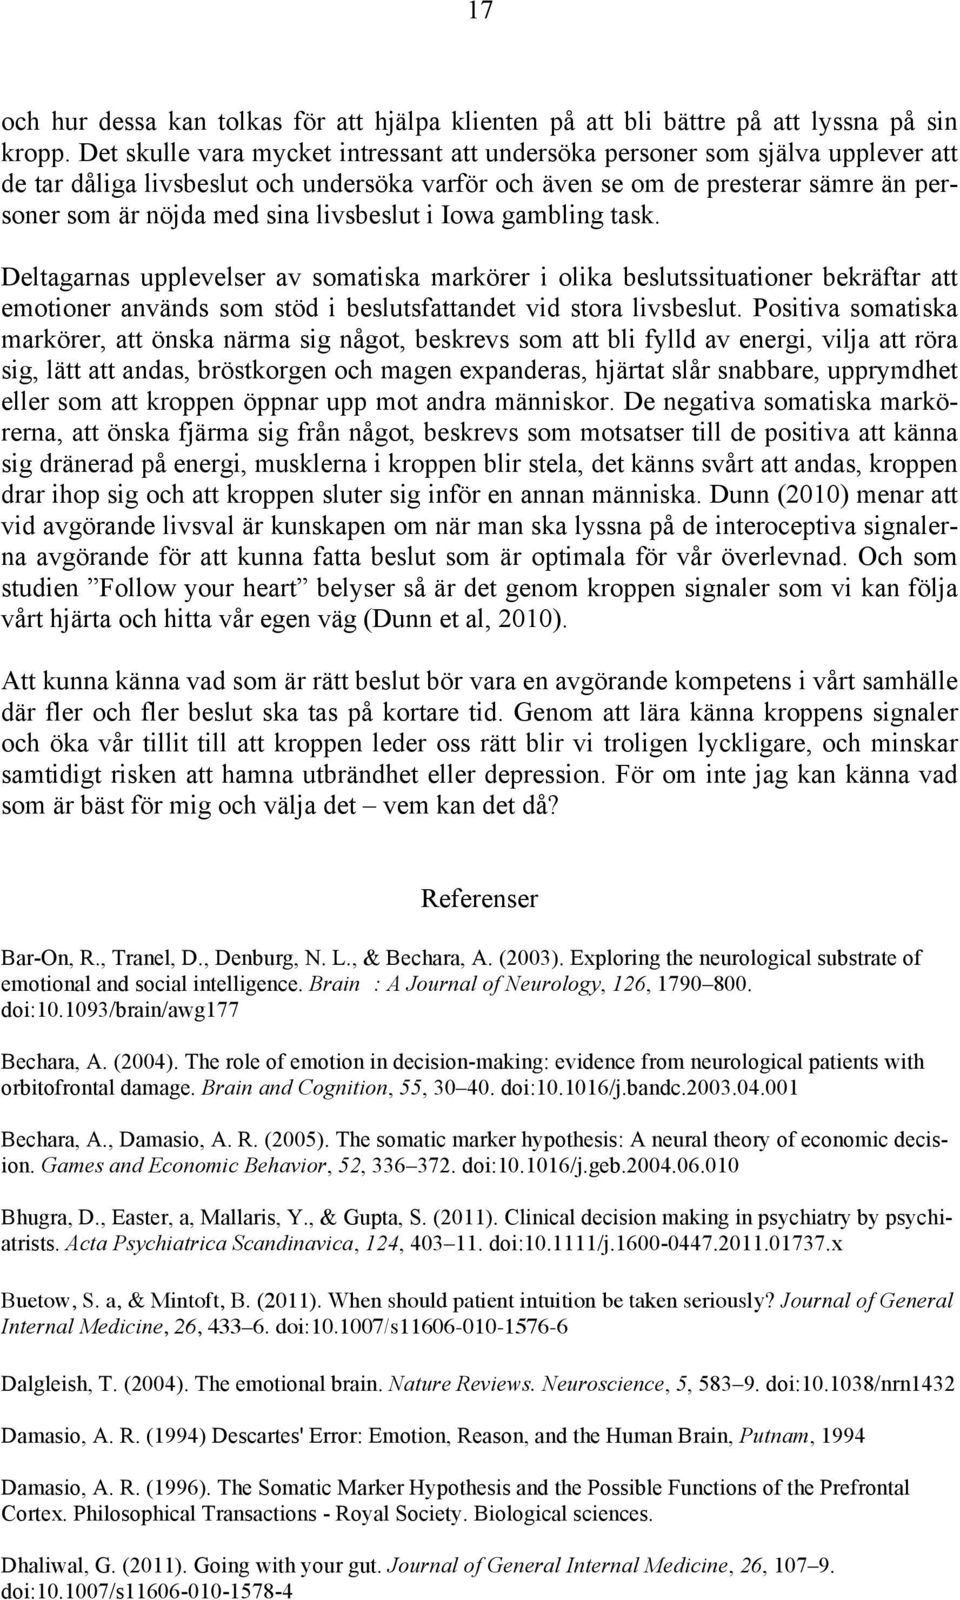 STOCKHOLMS UNIVERSITET PSYKOLOGISKA INSTITUTIONEN - PDF Gratis ...